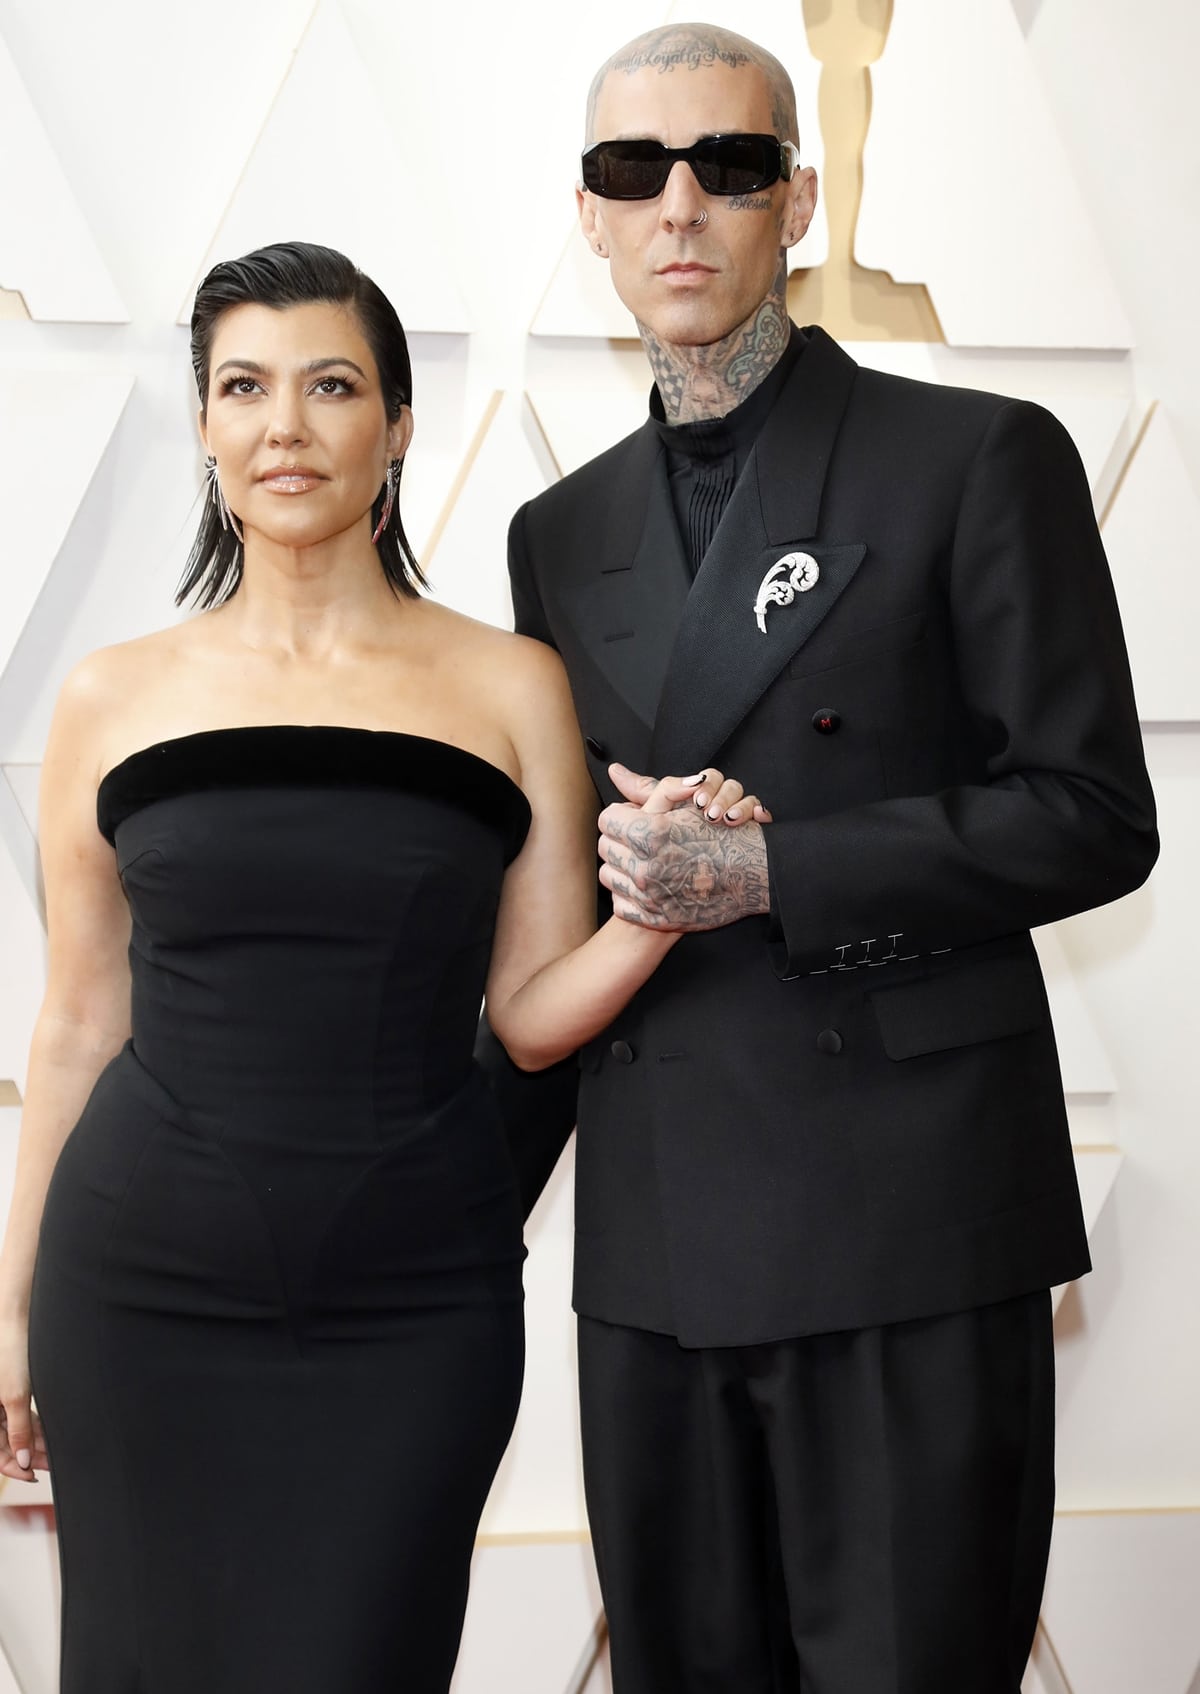 Kourtney Kardashian wore jewelry by Lorraine Schwartz for her very first Oscars with fiancé Travis Barker in a black suit by Maison Margiela